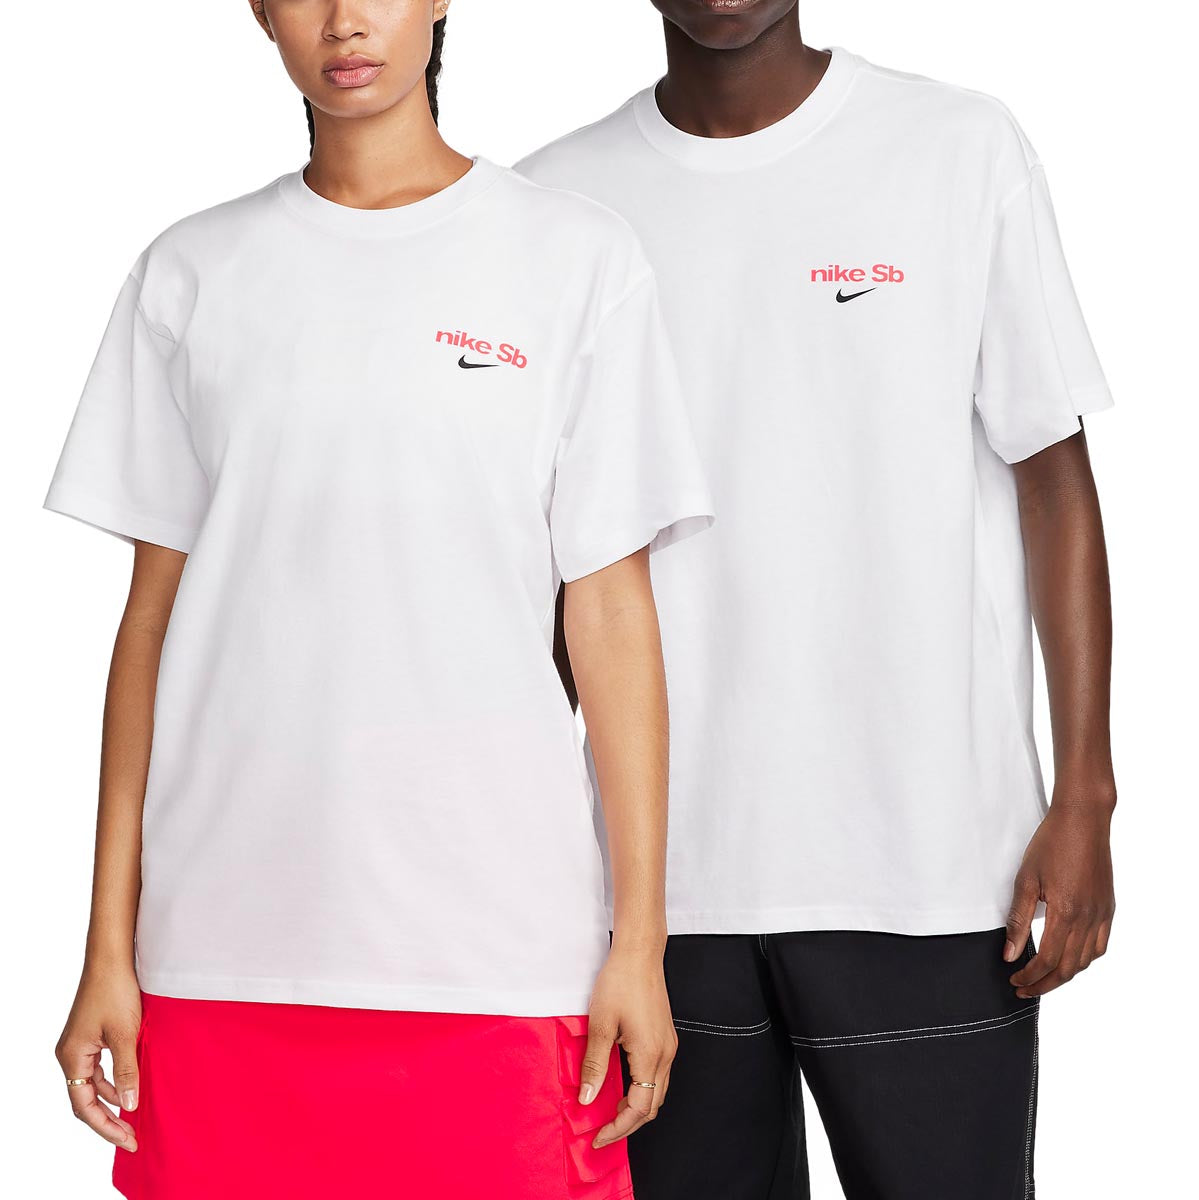 Nike SB Anchored T-Shirt - White image 3